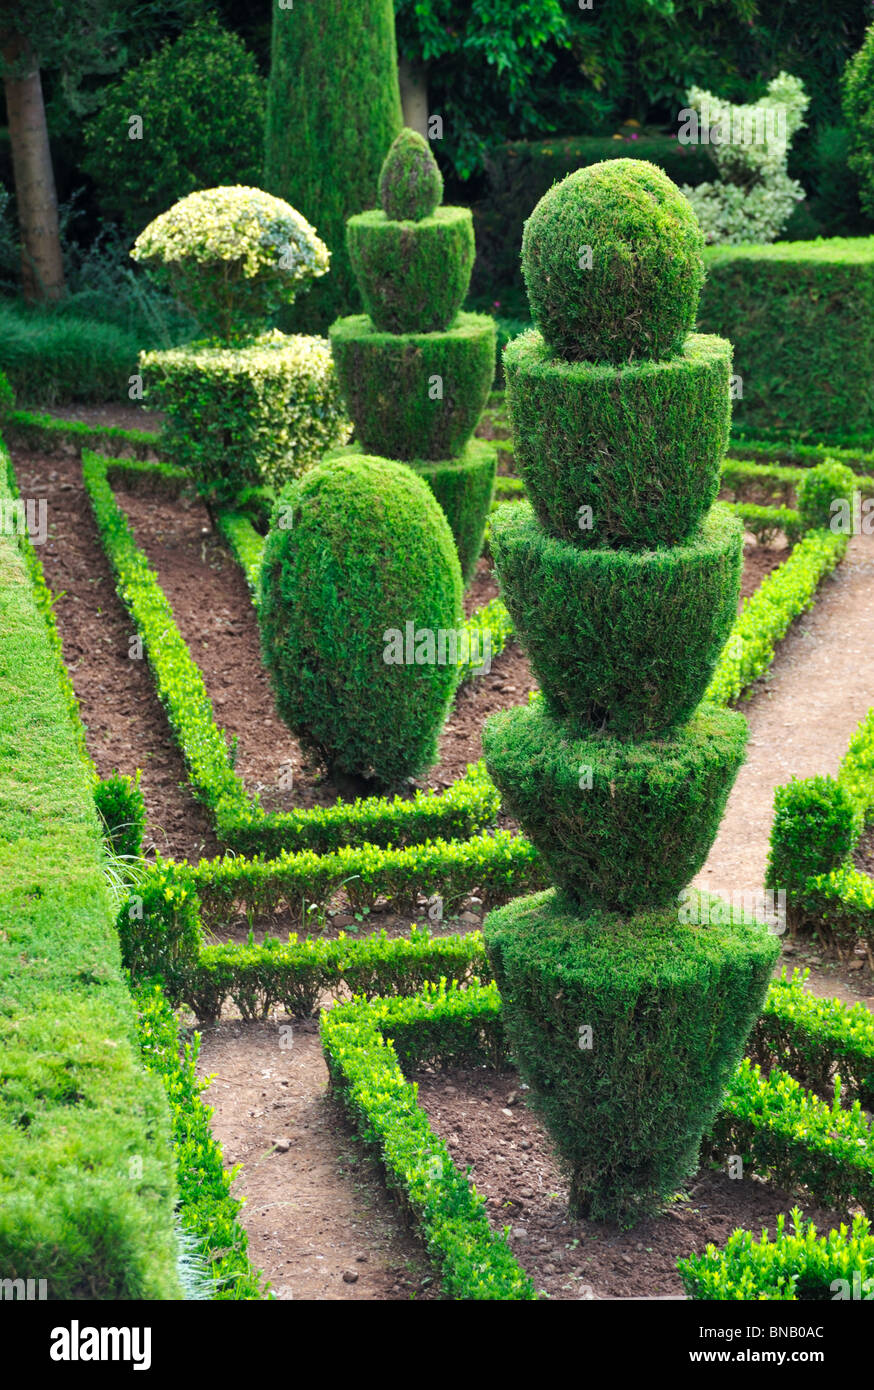 Decorative green park – Botanical garden Funchal,Madeira Stock Photo